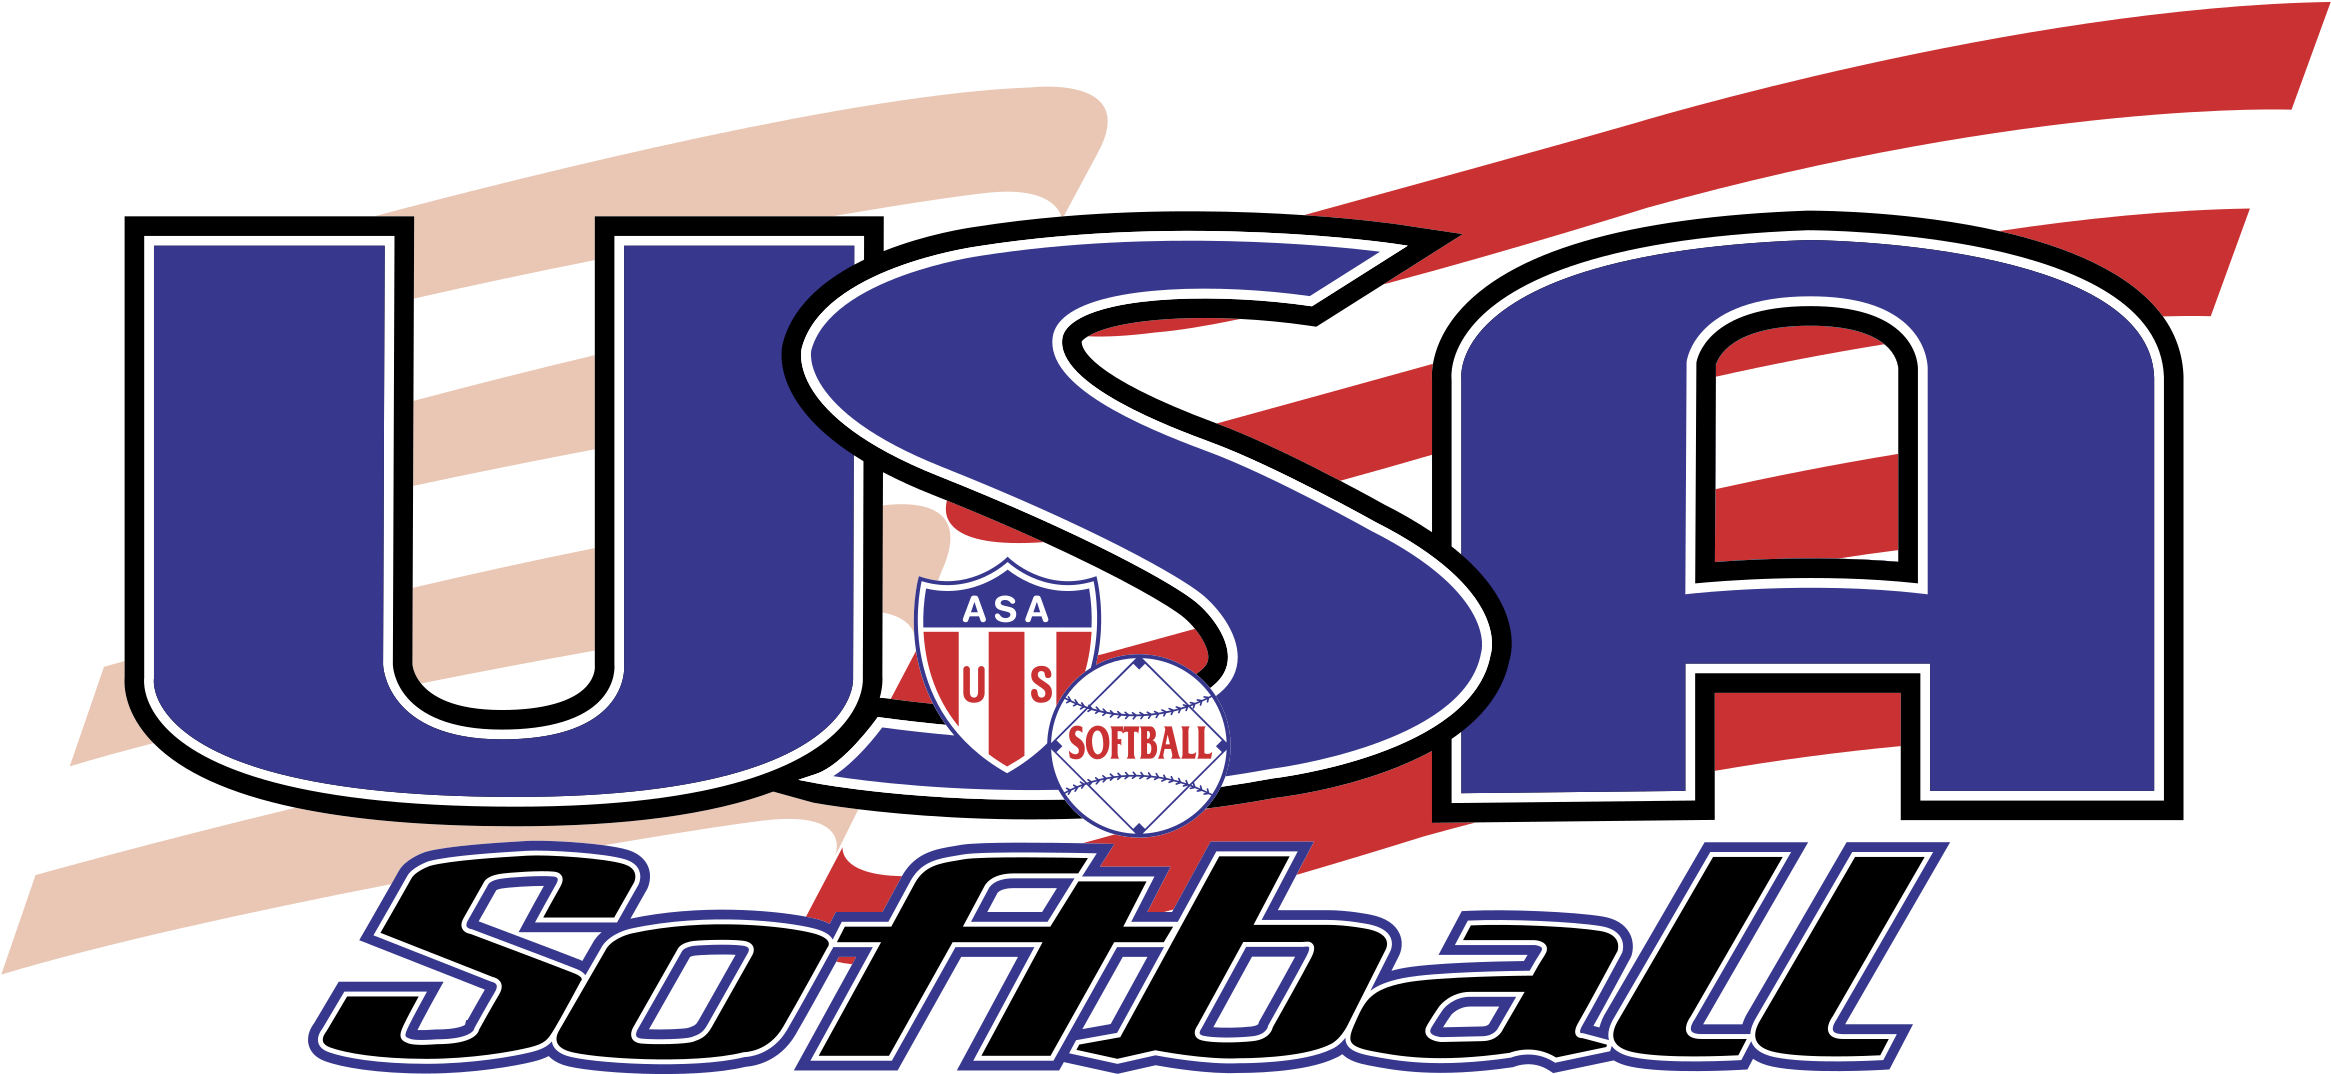 Usa Softball Logo Black And White - Official Rules Of Softball [book] (2400x2400)